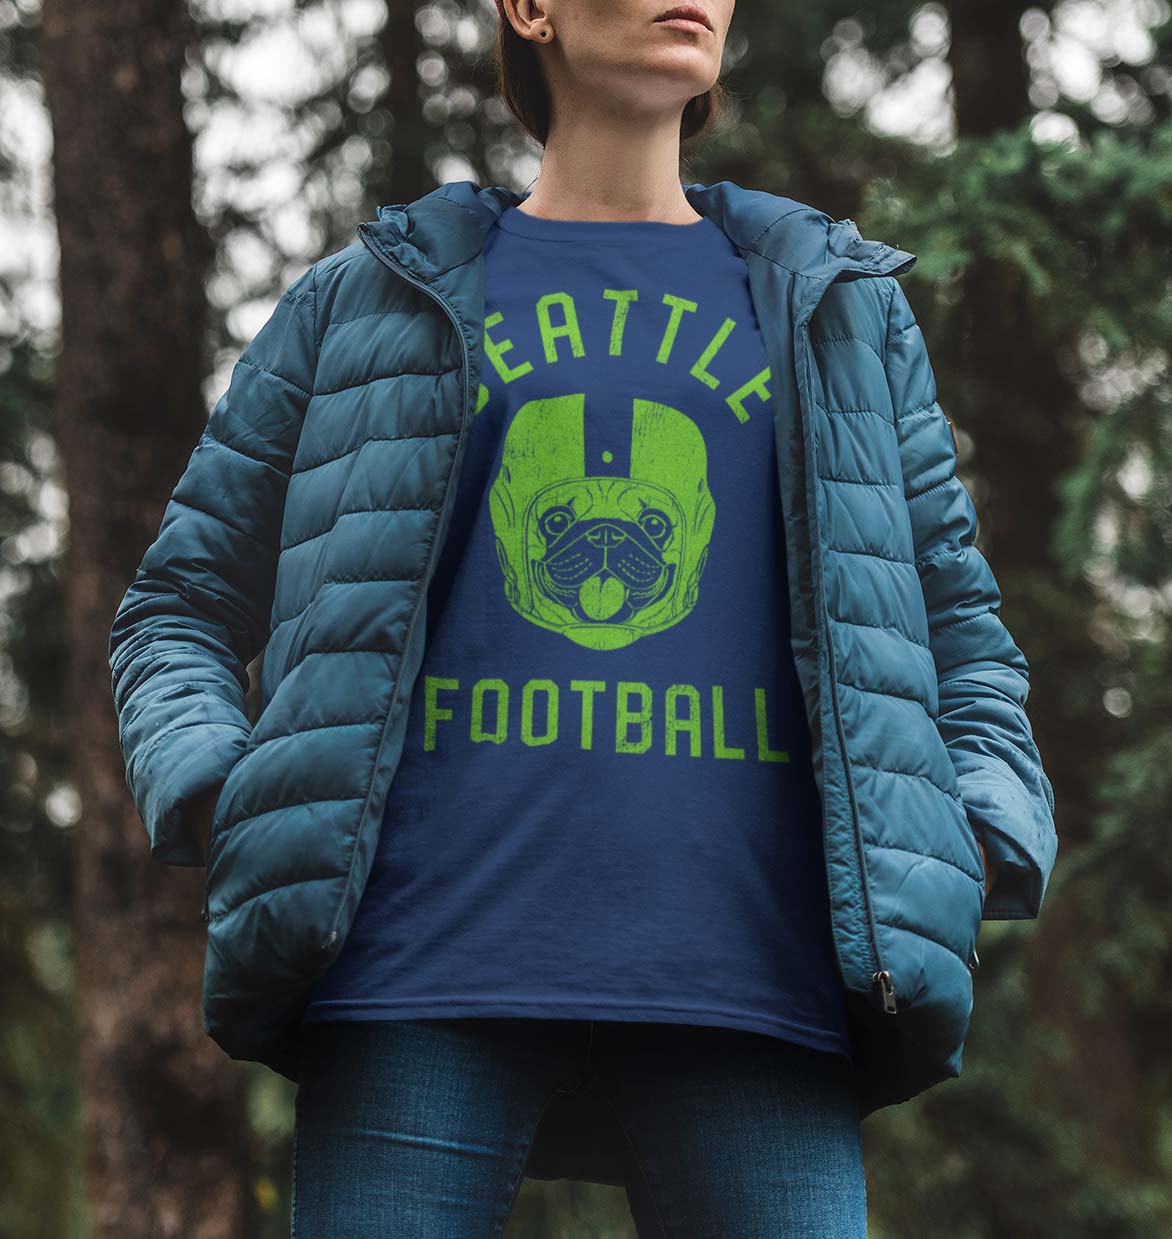 Seattle Football Pug T-Shirt